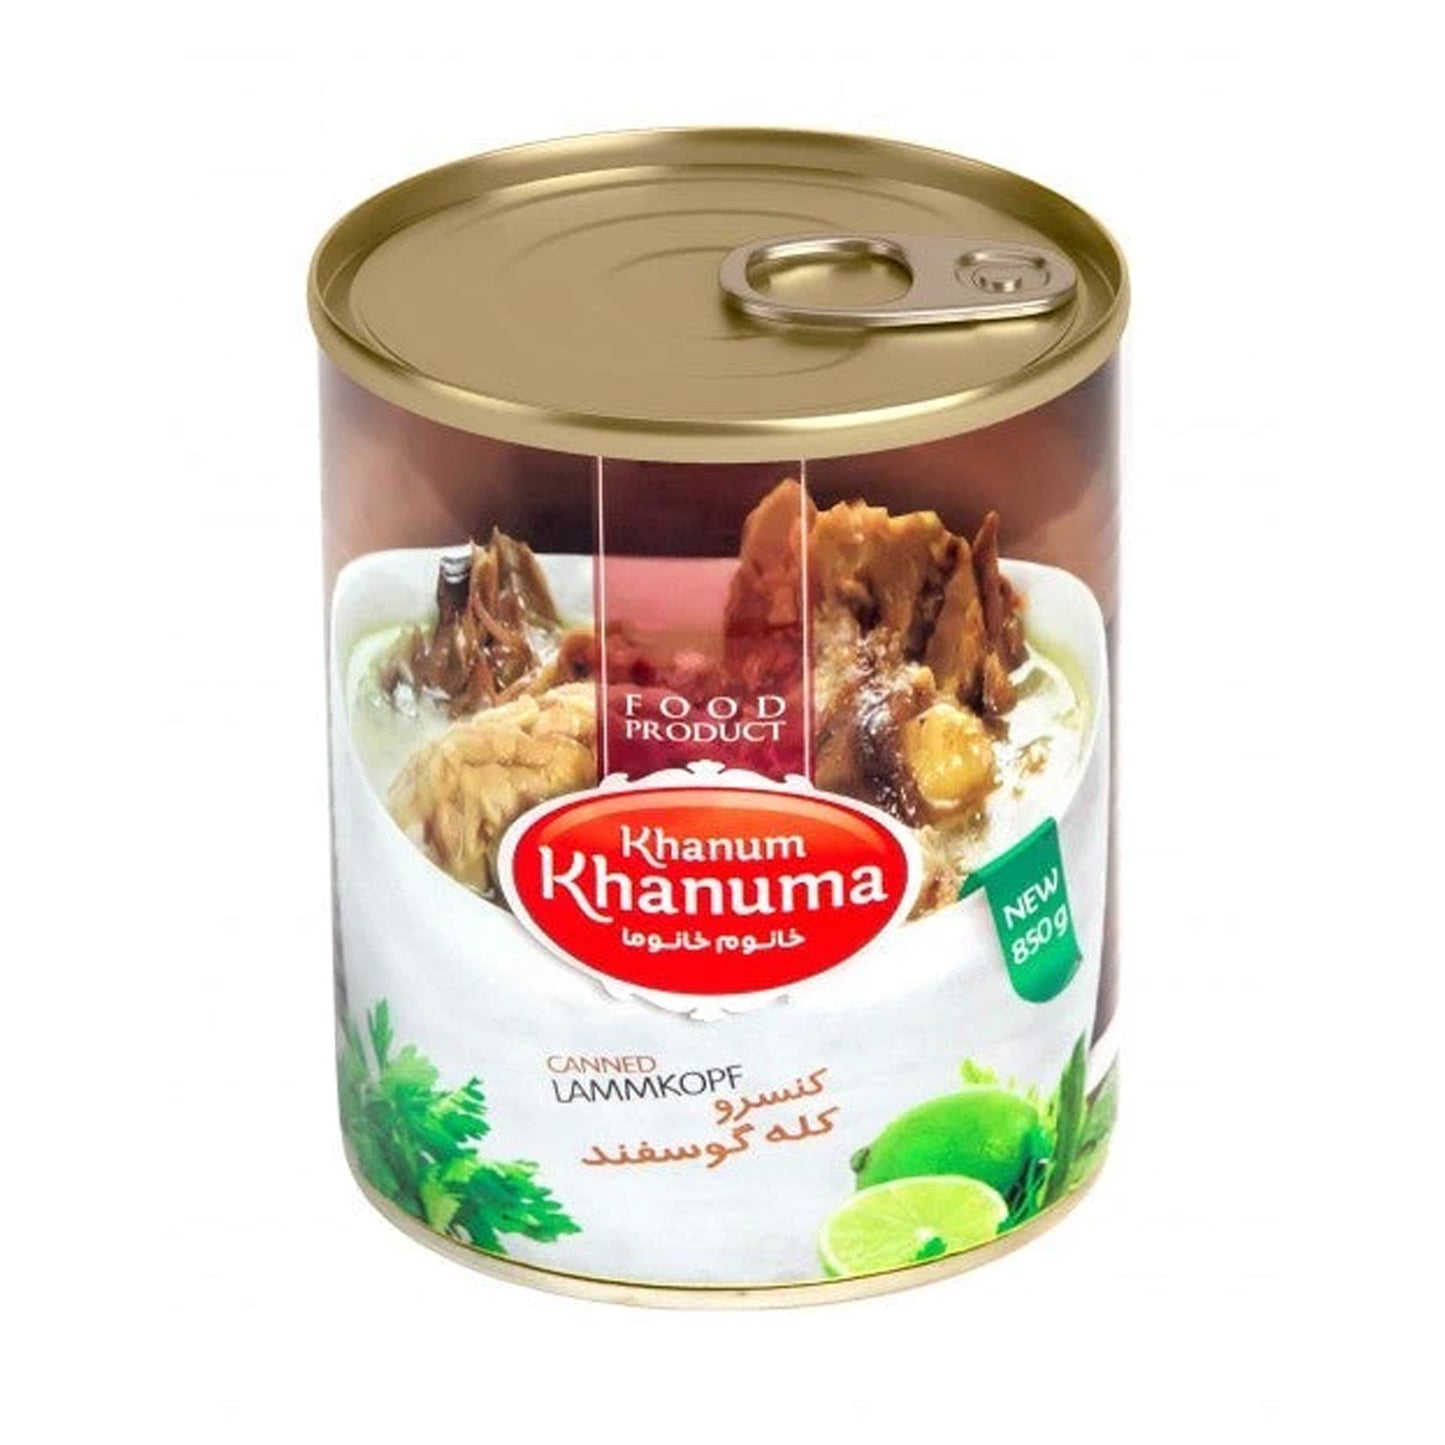 Khanum Khanuma Canned Lammkopf 850g